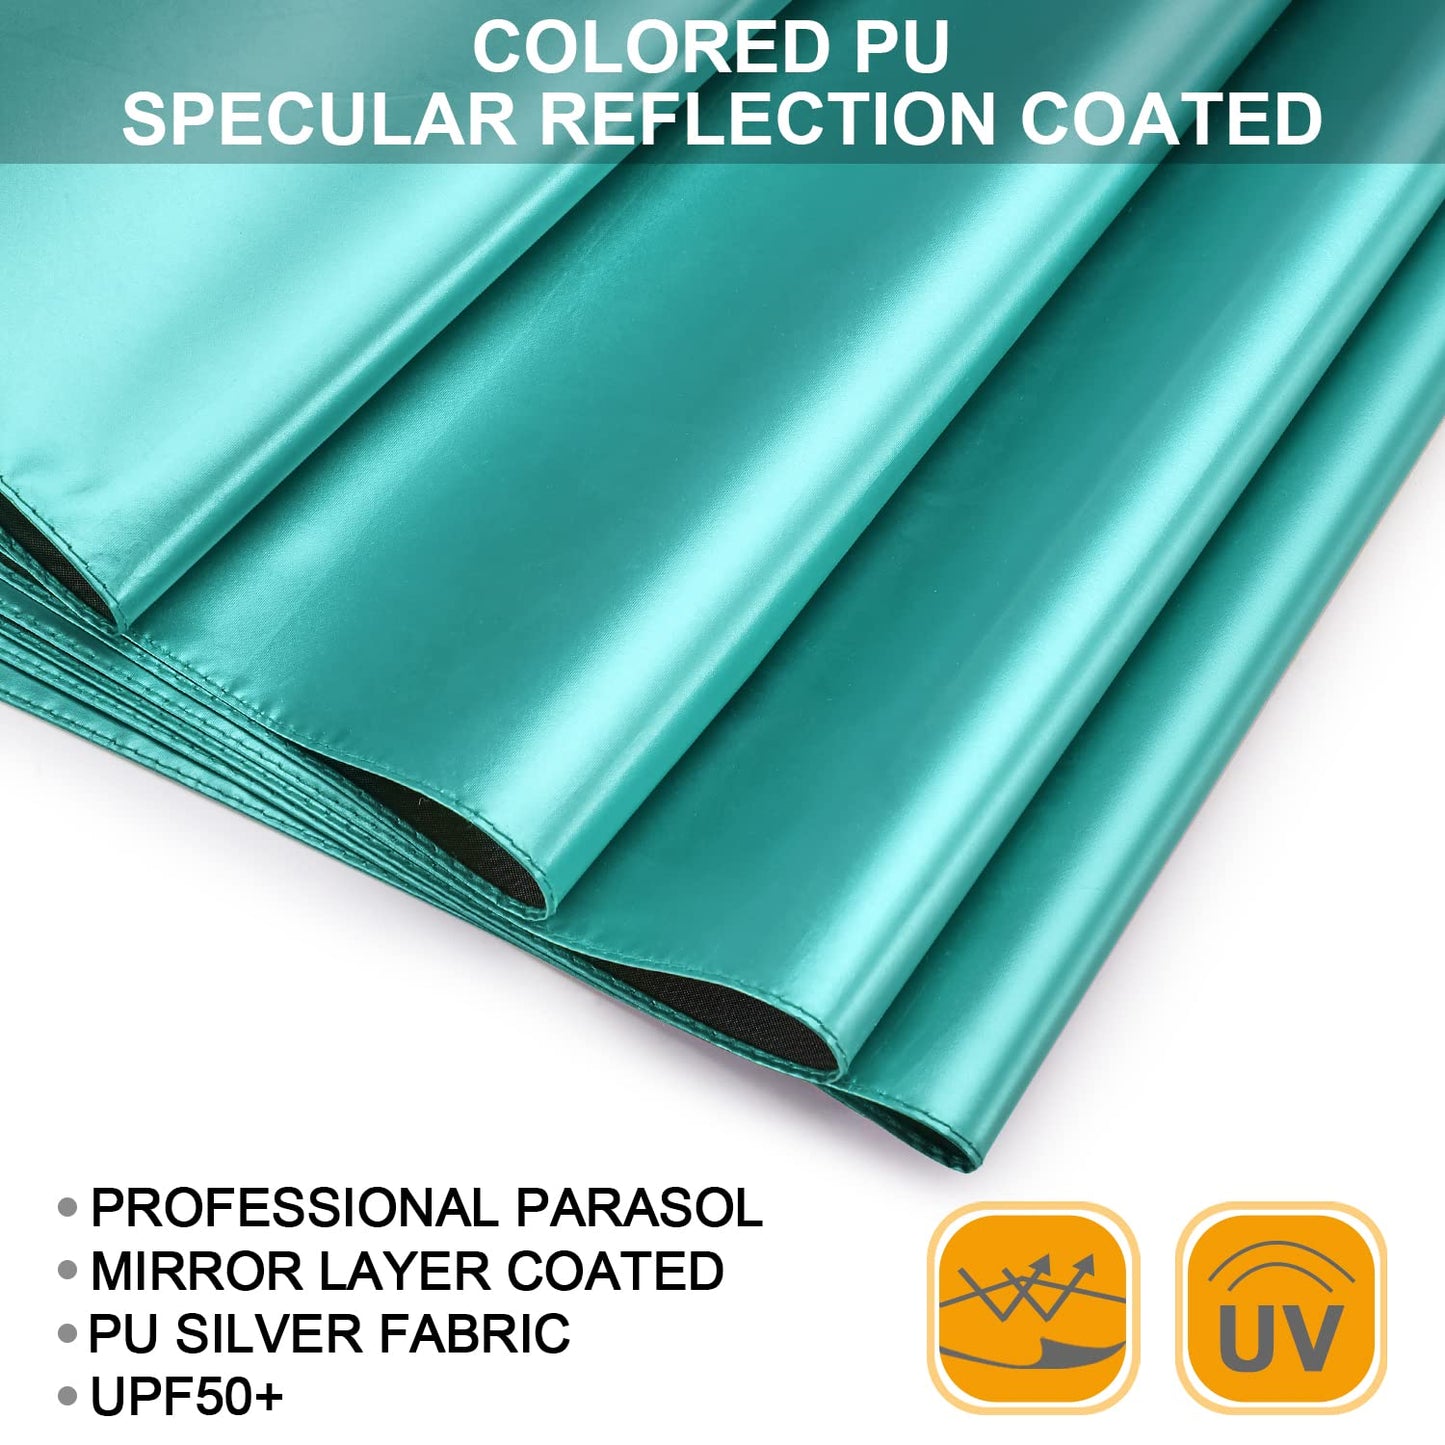 G4Free UV Protection Windproof Sun Rain Umbrellas